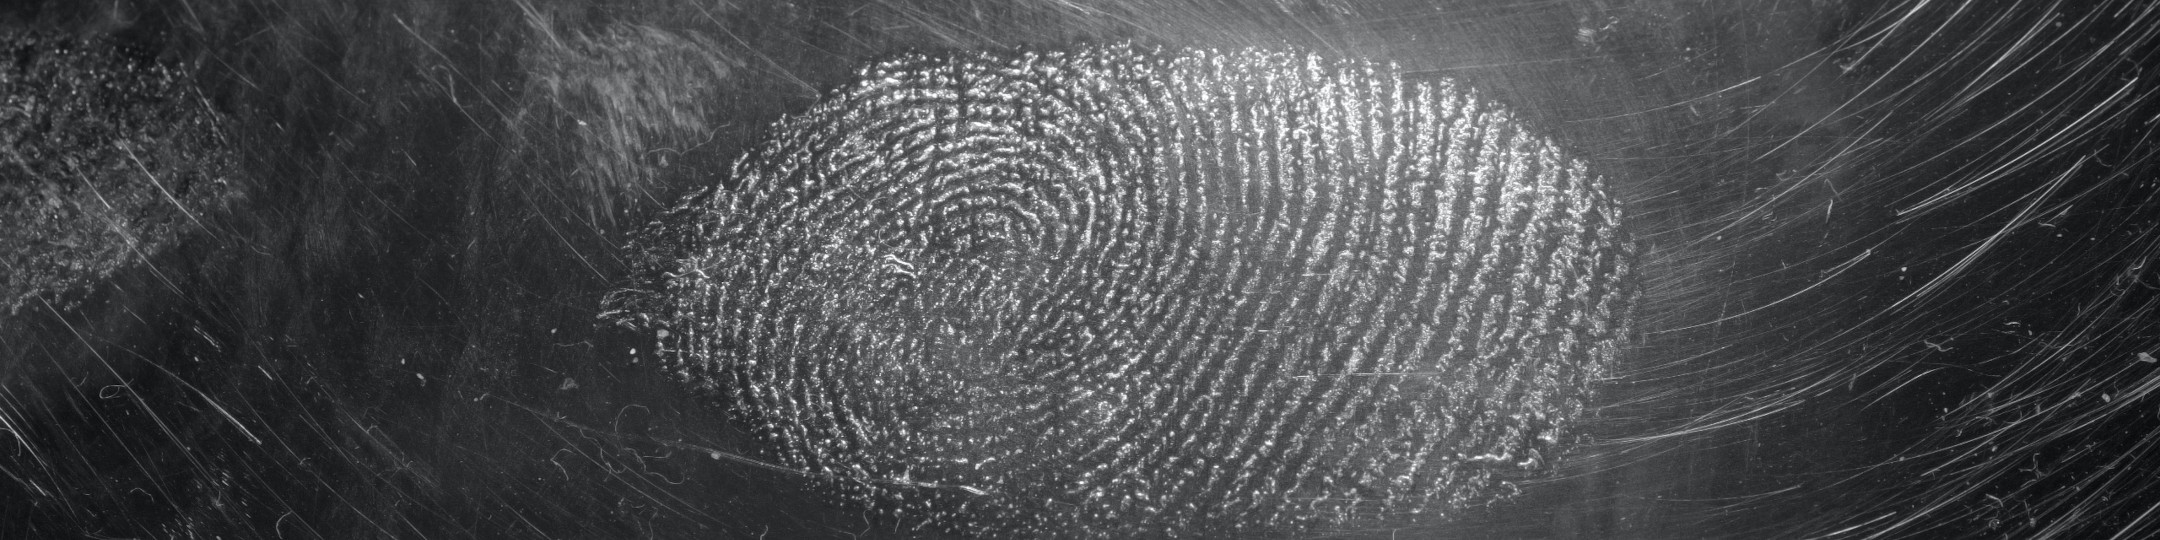 Grey fingerprint on a black glass type background